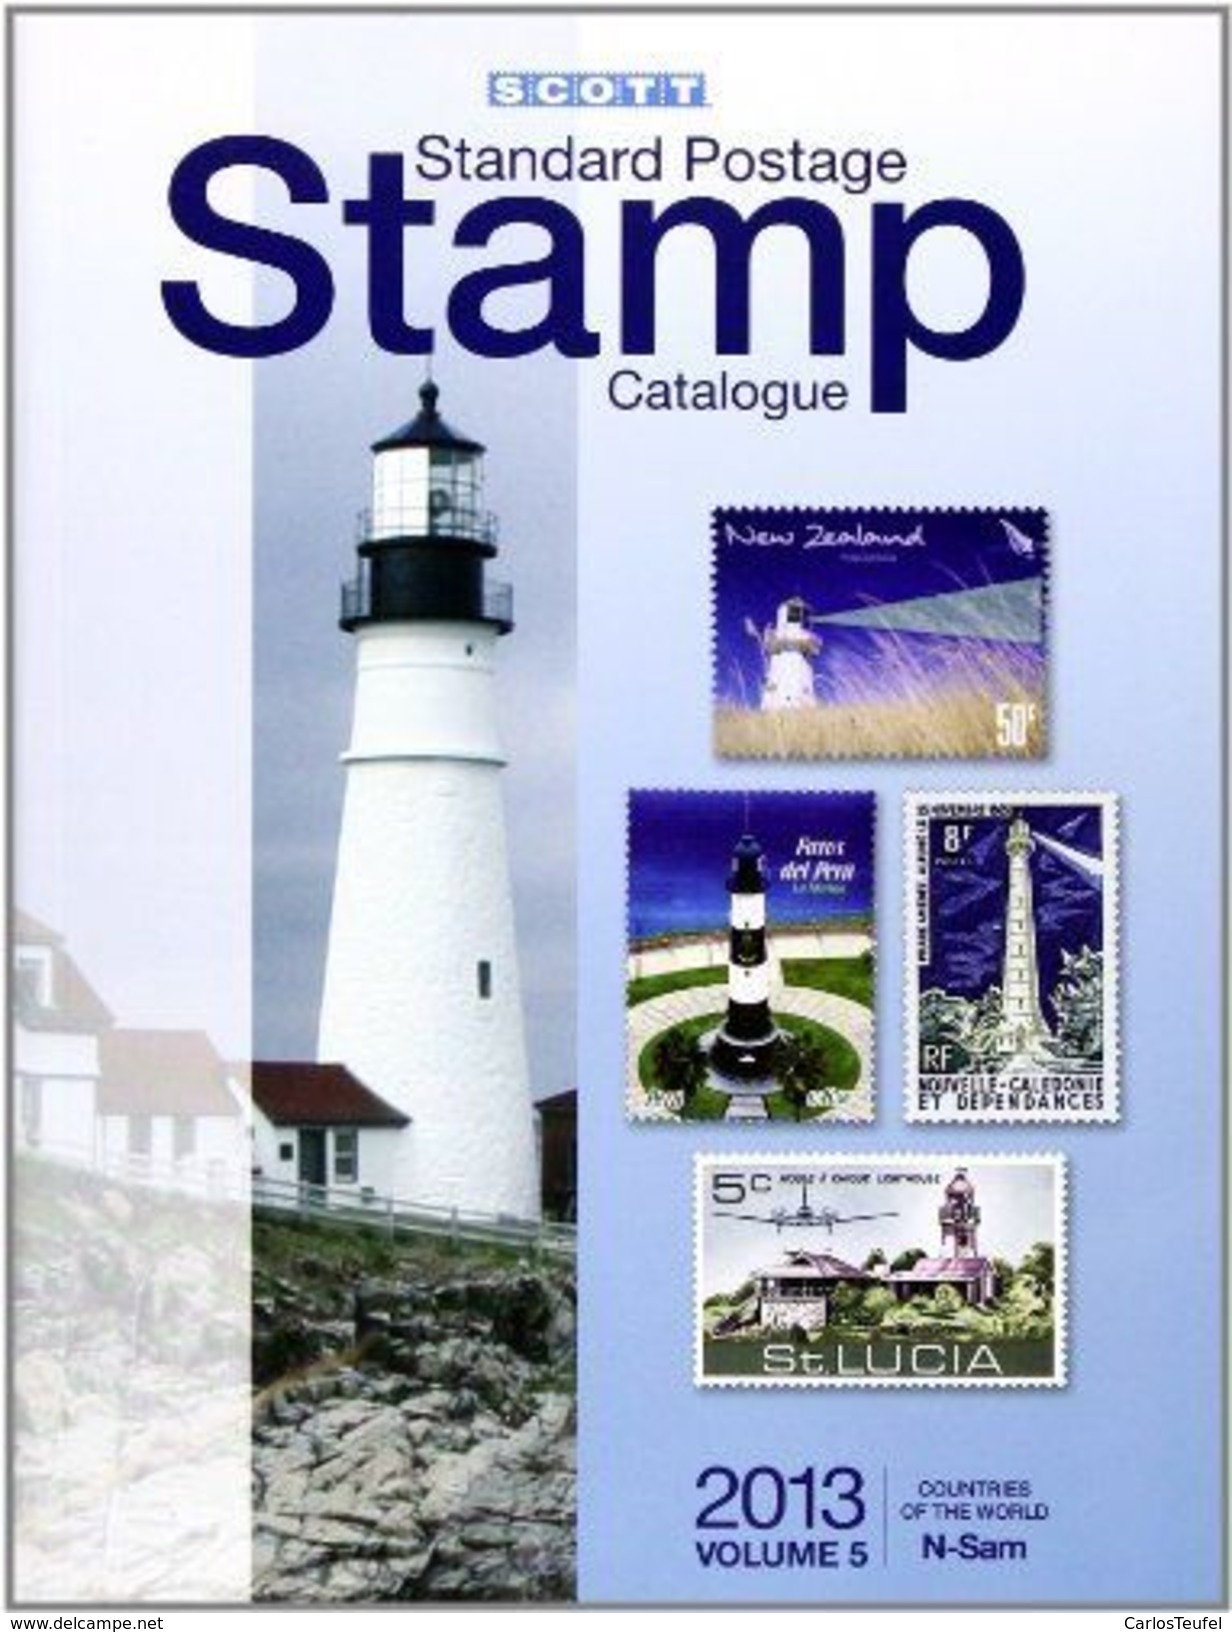 SCOTT STAMPS CATALOG 2013 SET (A - Z) eBOOKS in 3 DVD - PDF